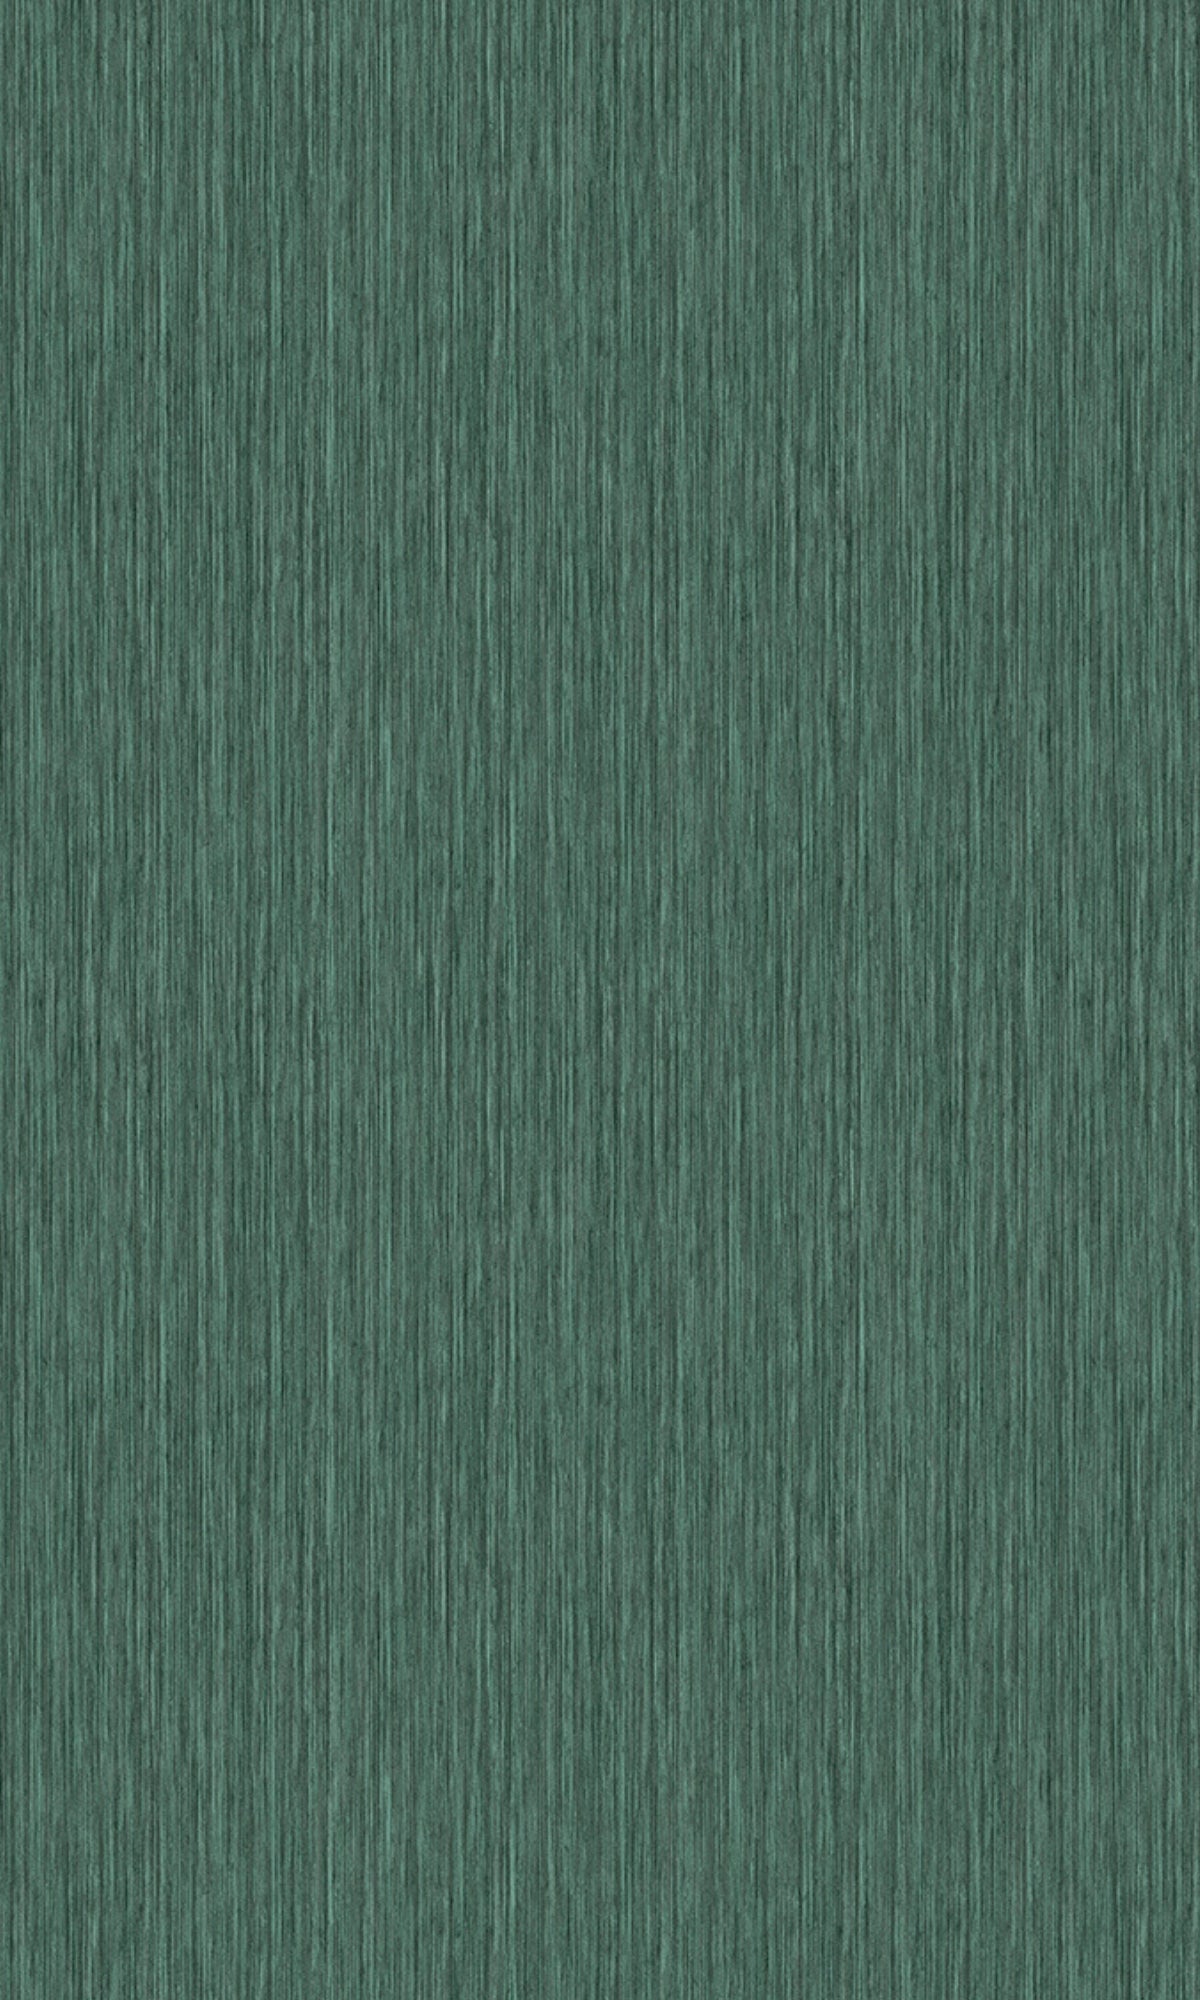 Dark Green Plain Textured Wallpaper R8114